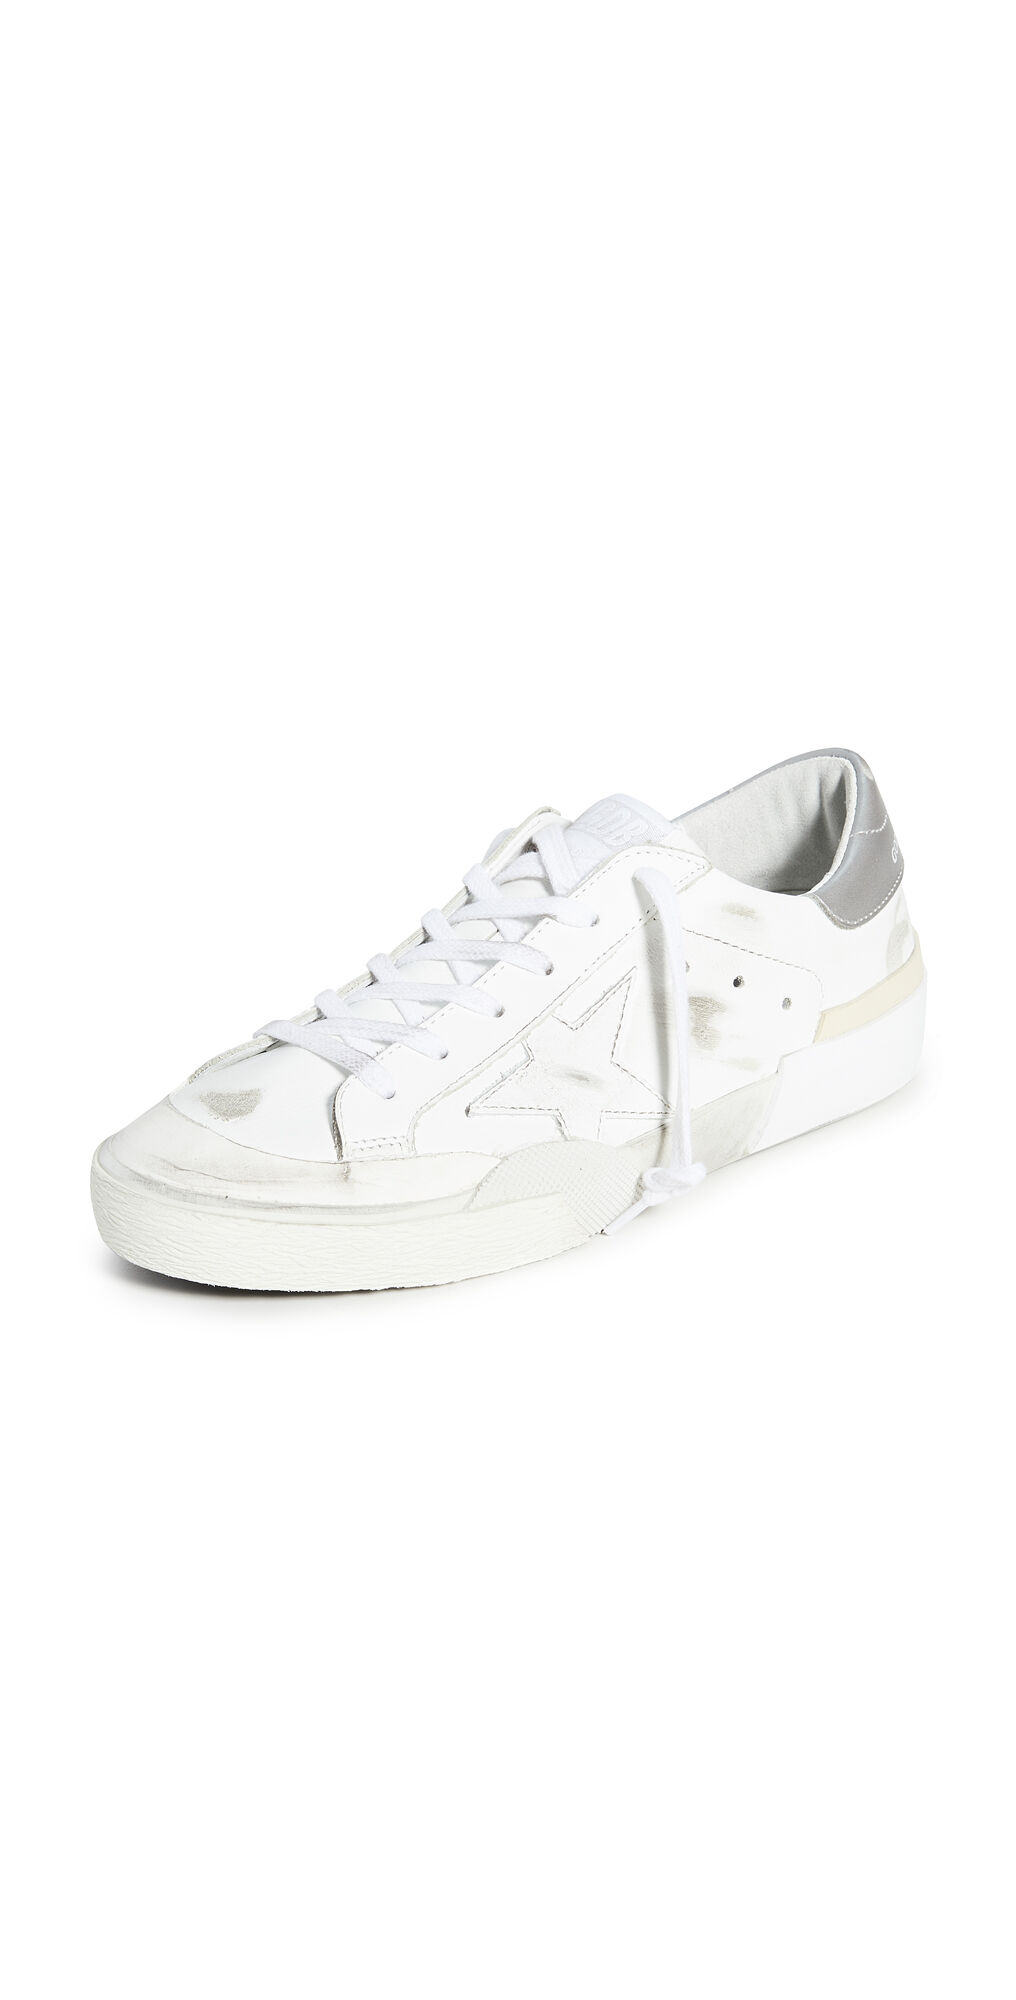 Golden Goose Superstar Sneakers All White/Multi 37  All White/Multi  size:37